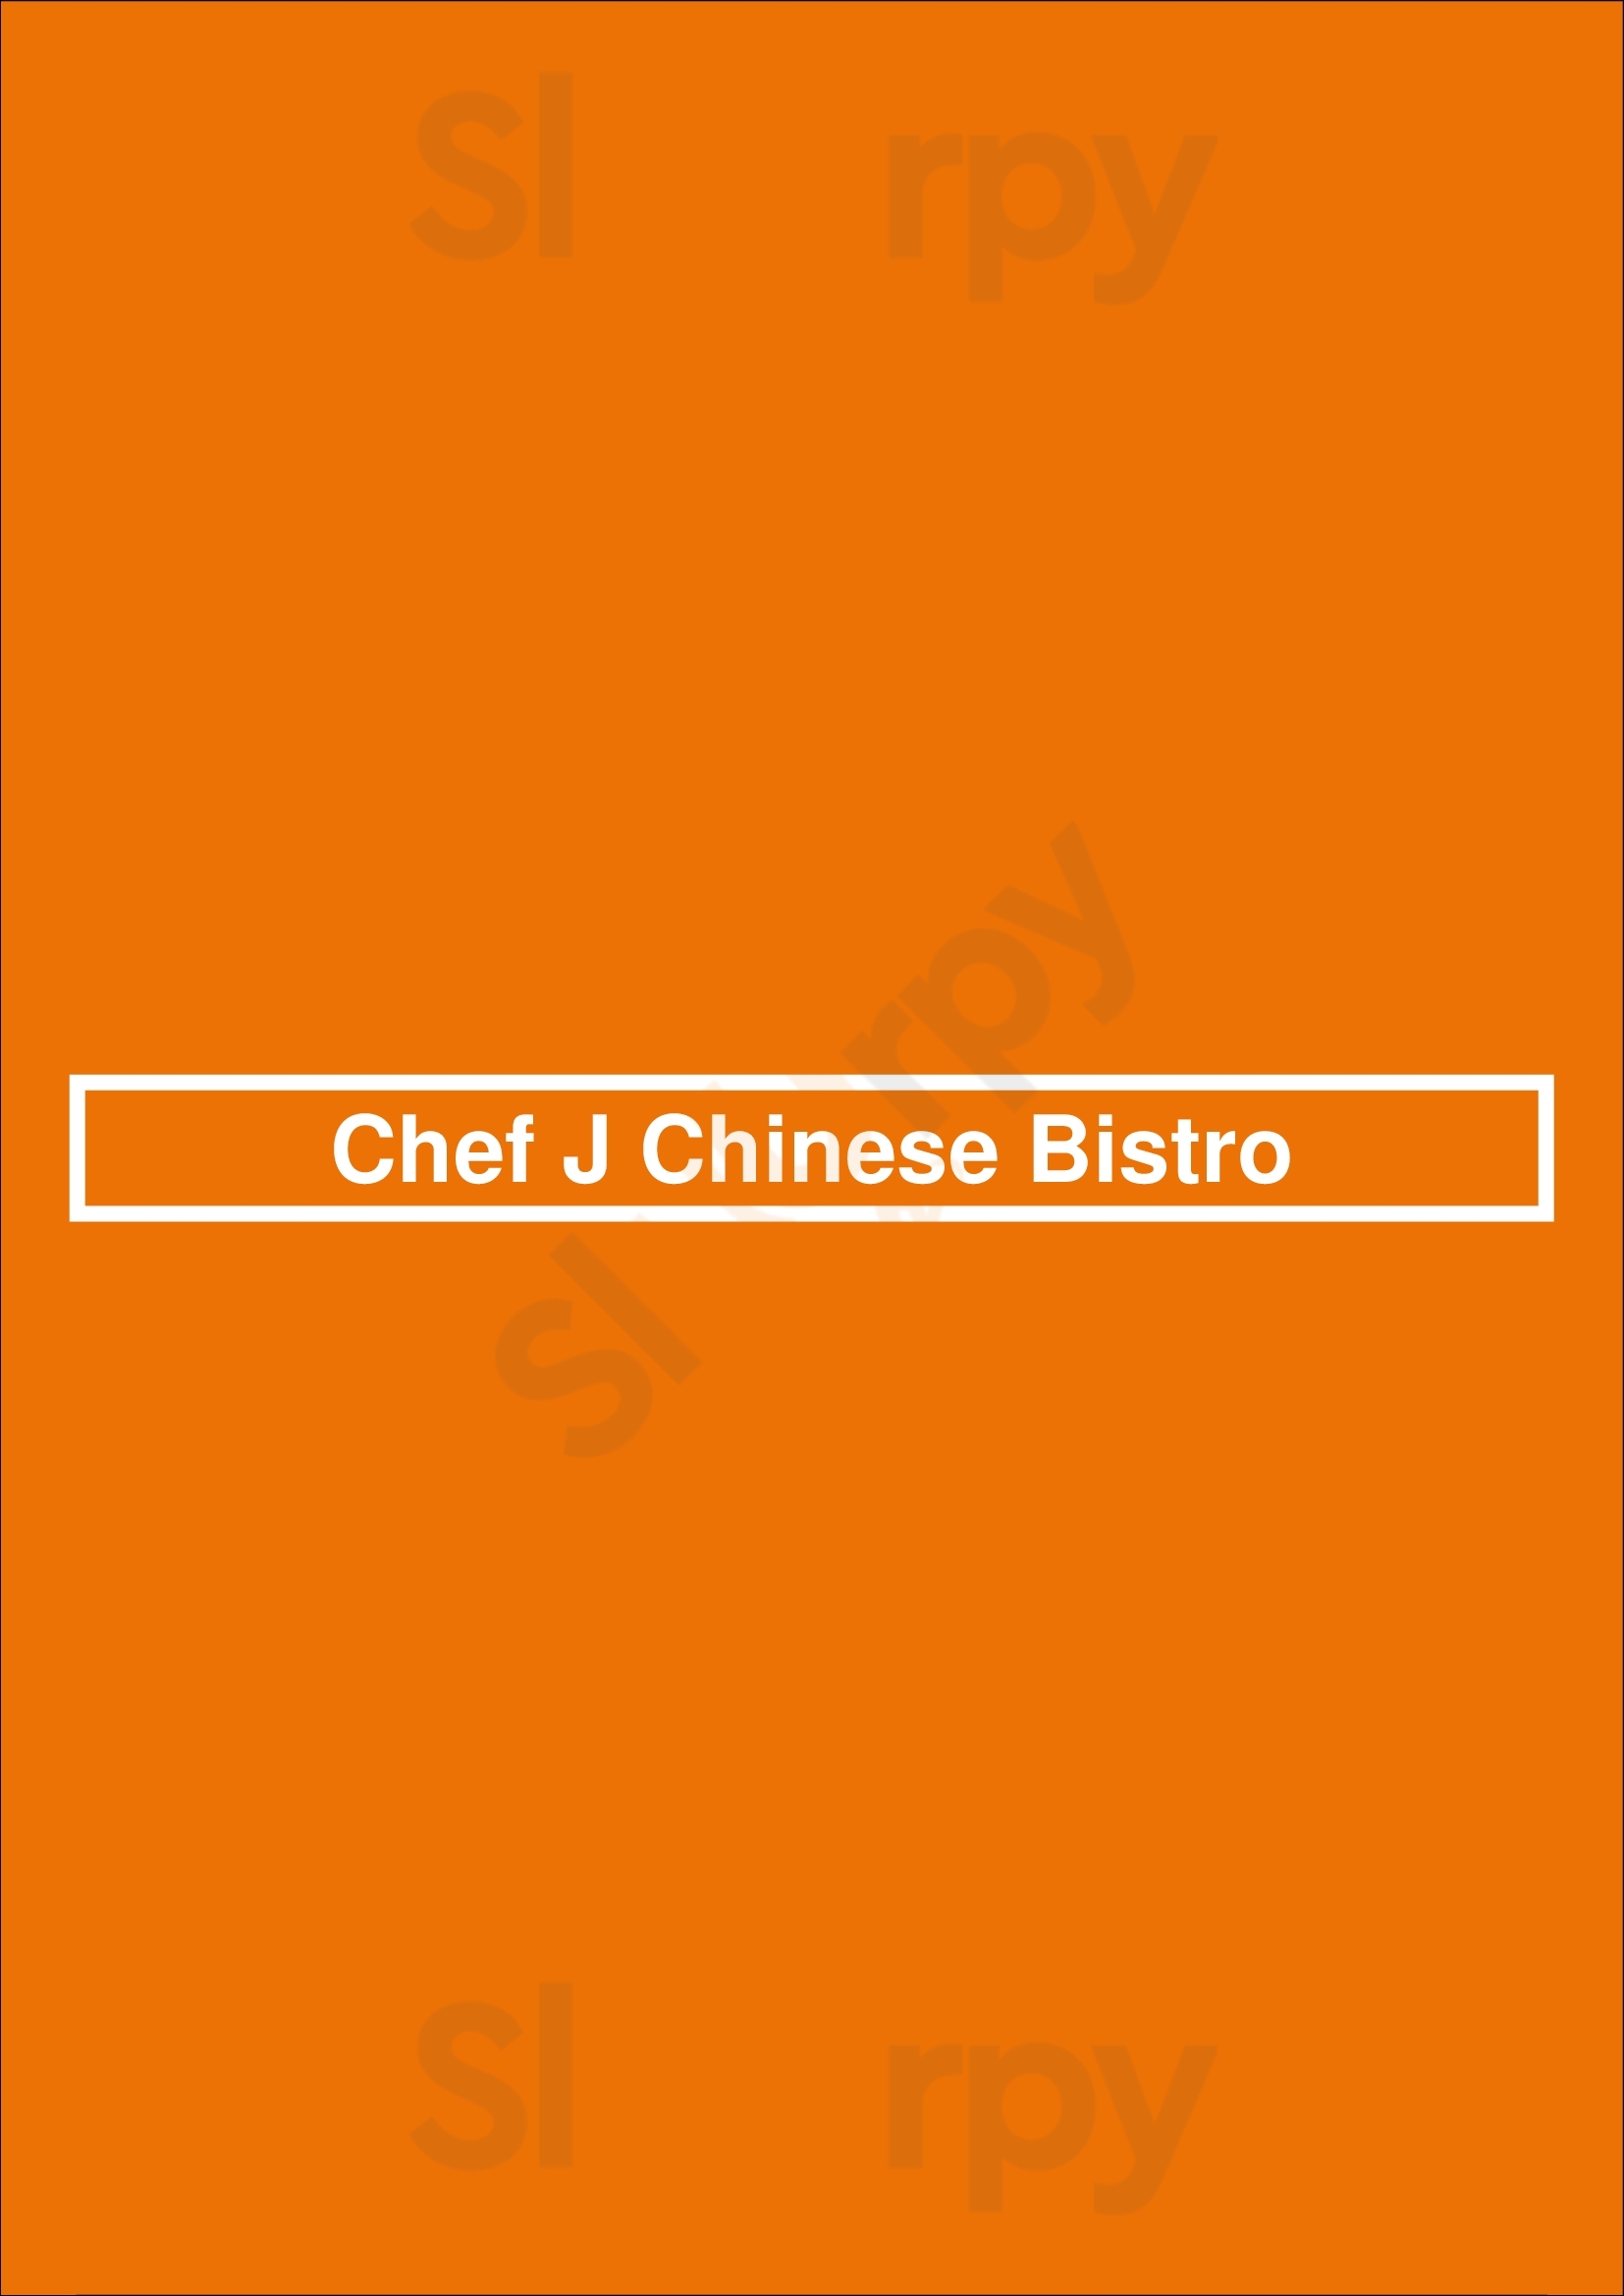 Chef J Chinese Bistro Scottsdale Menu - 1